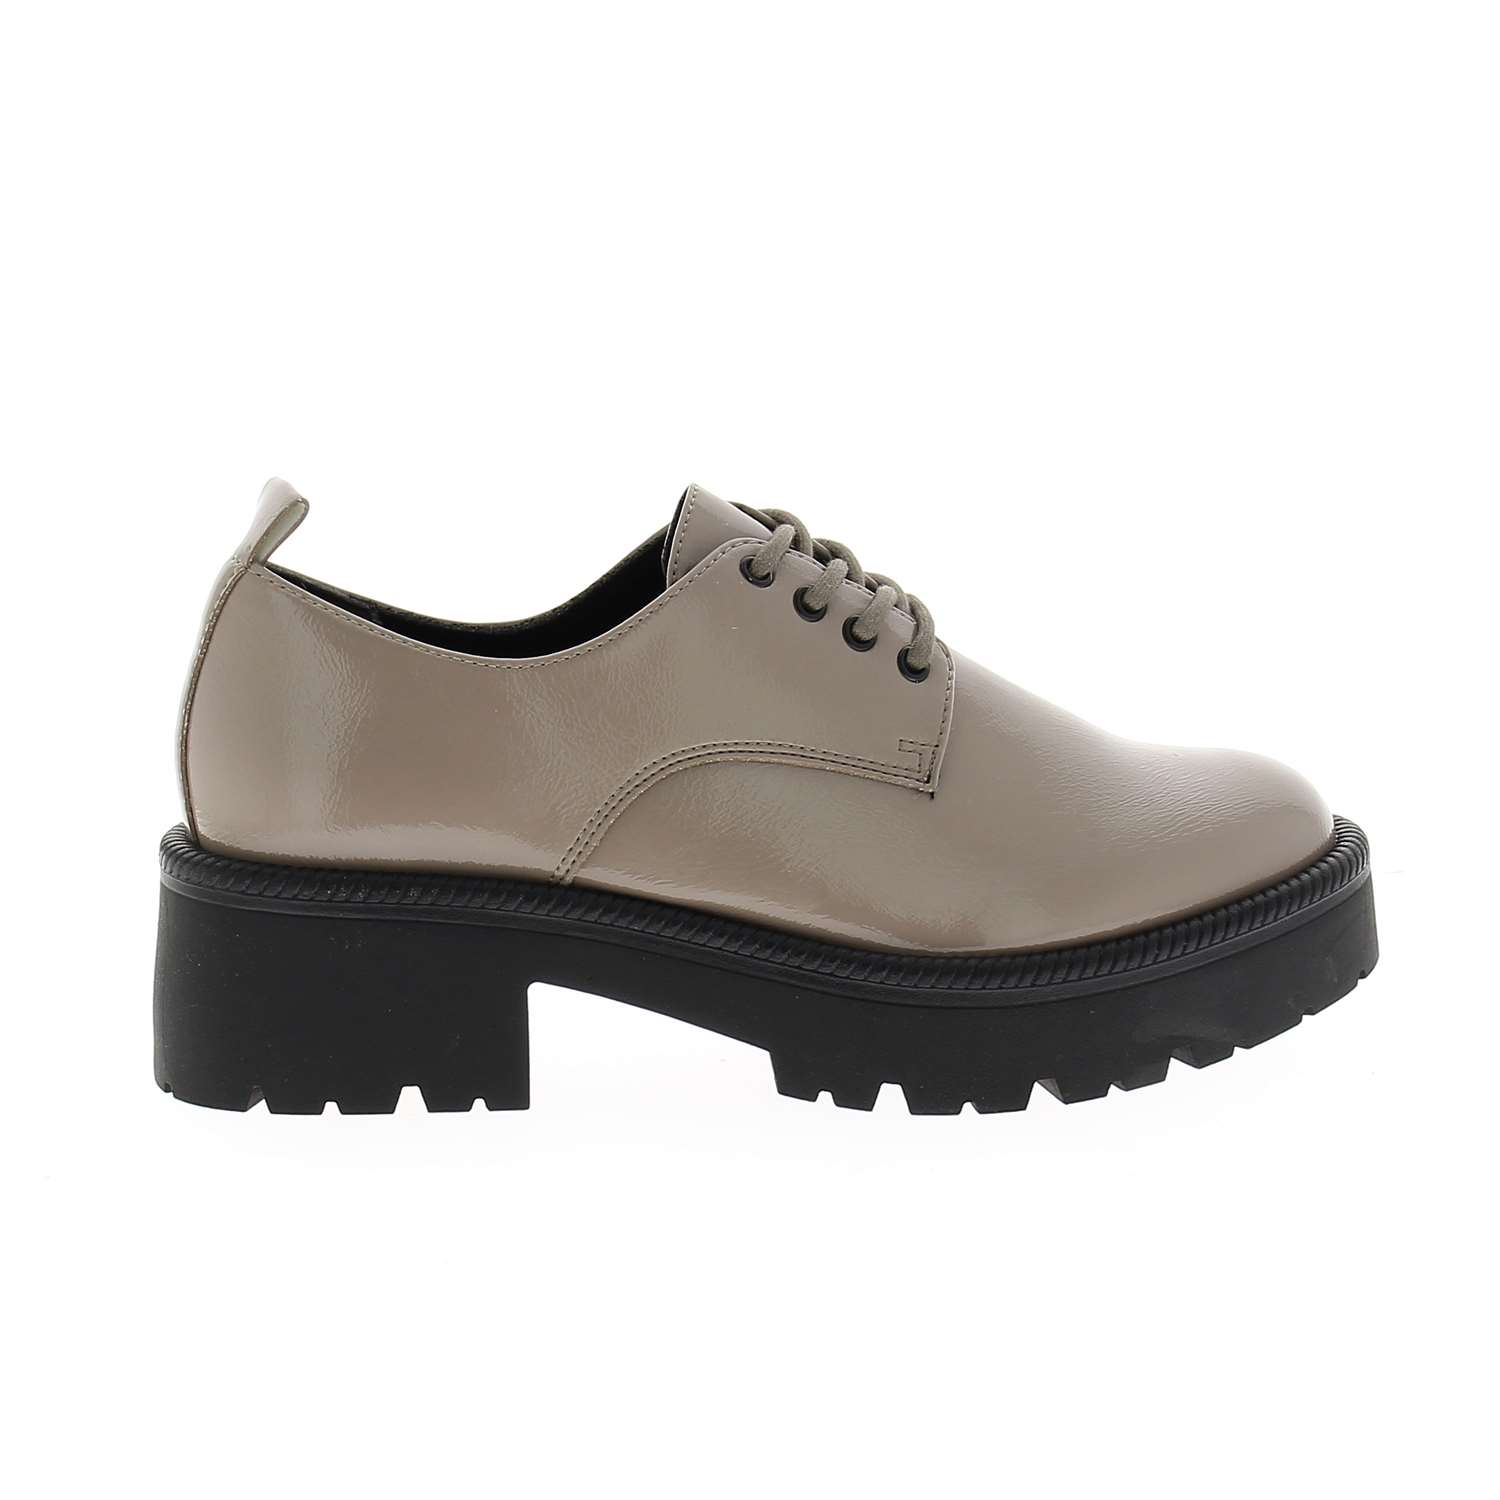 02 - TALY - TAMARIS - Chaussures à lacets - Synthétique